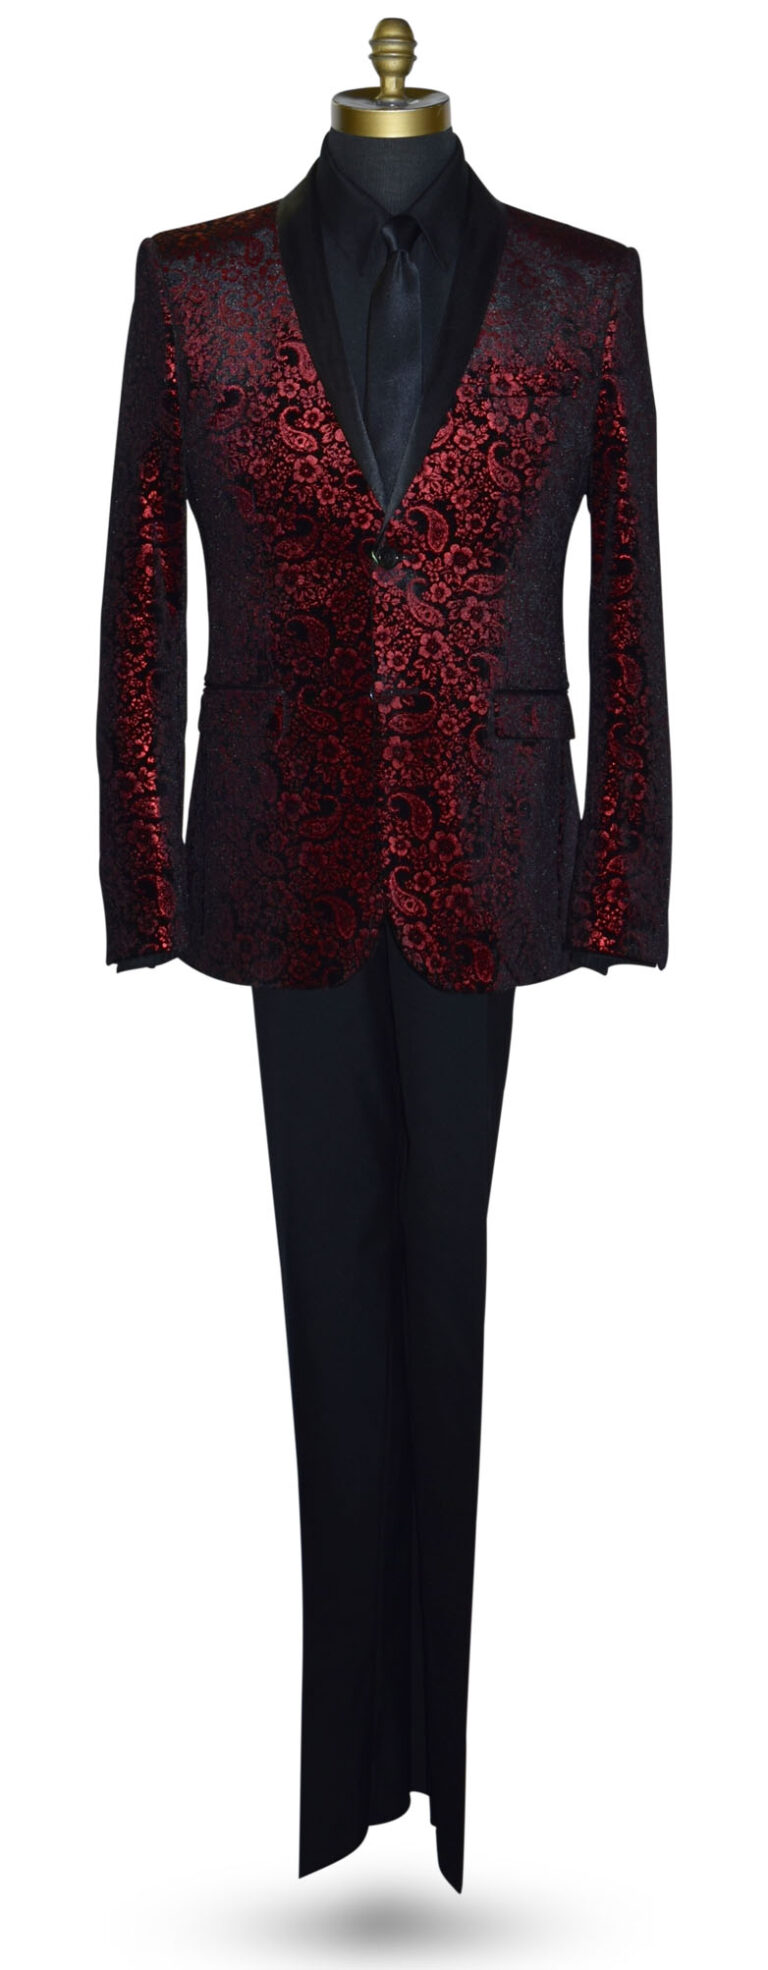 Red Velvet Tuxedo Jacket with Paisley Print